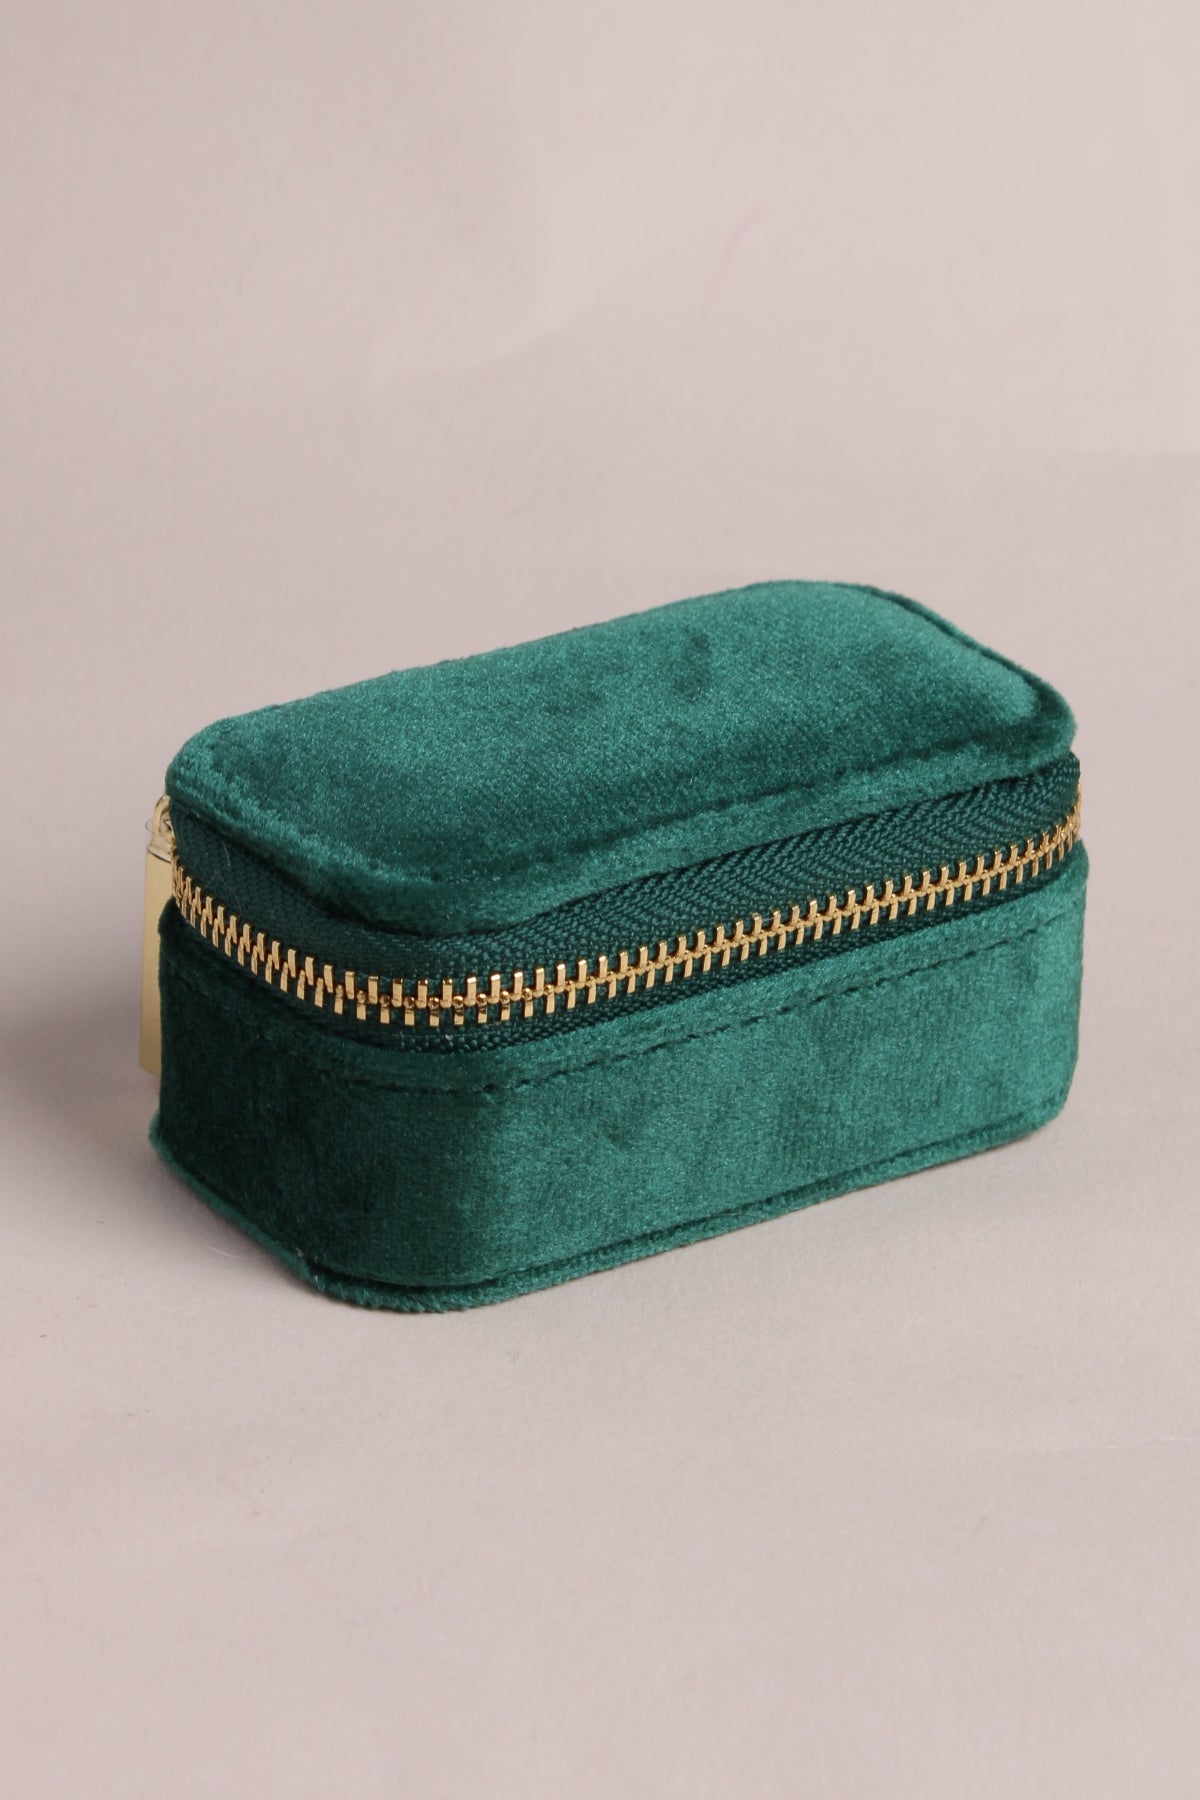 La Mini Boîte à Bijoux - vert émeraude - waekura